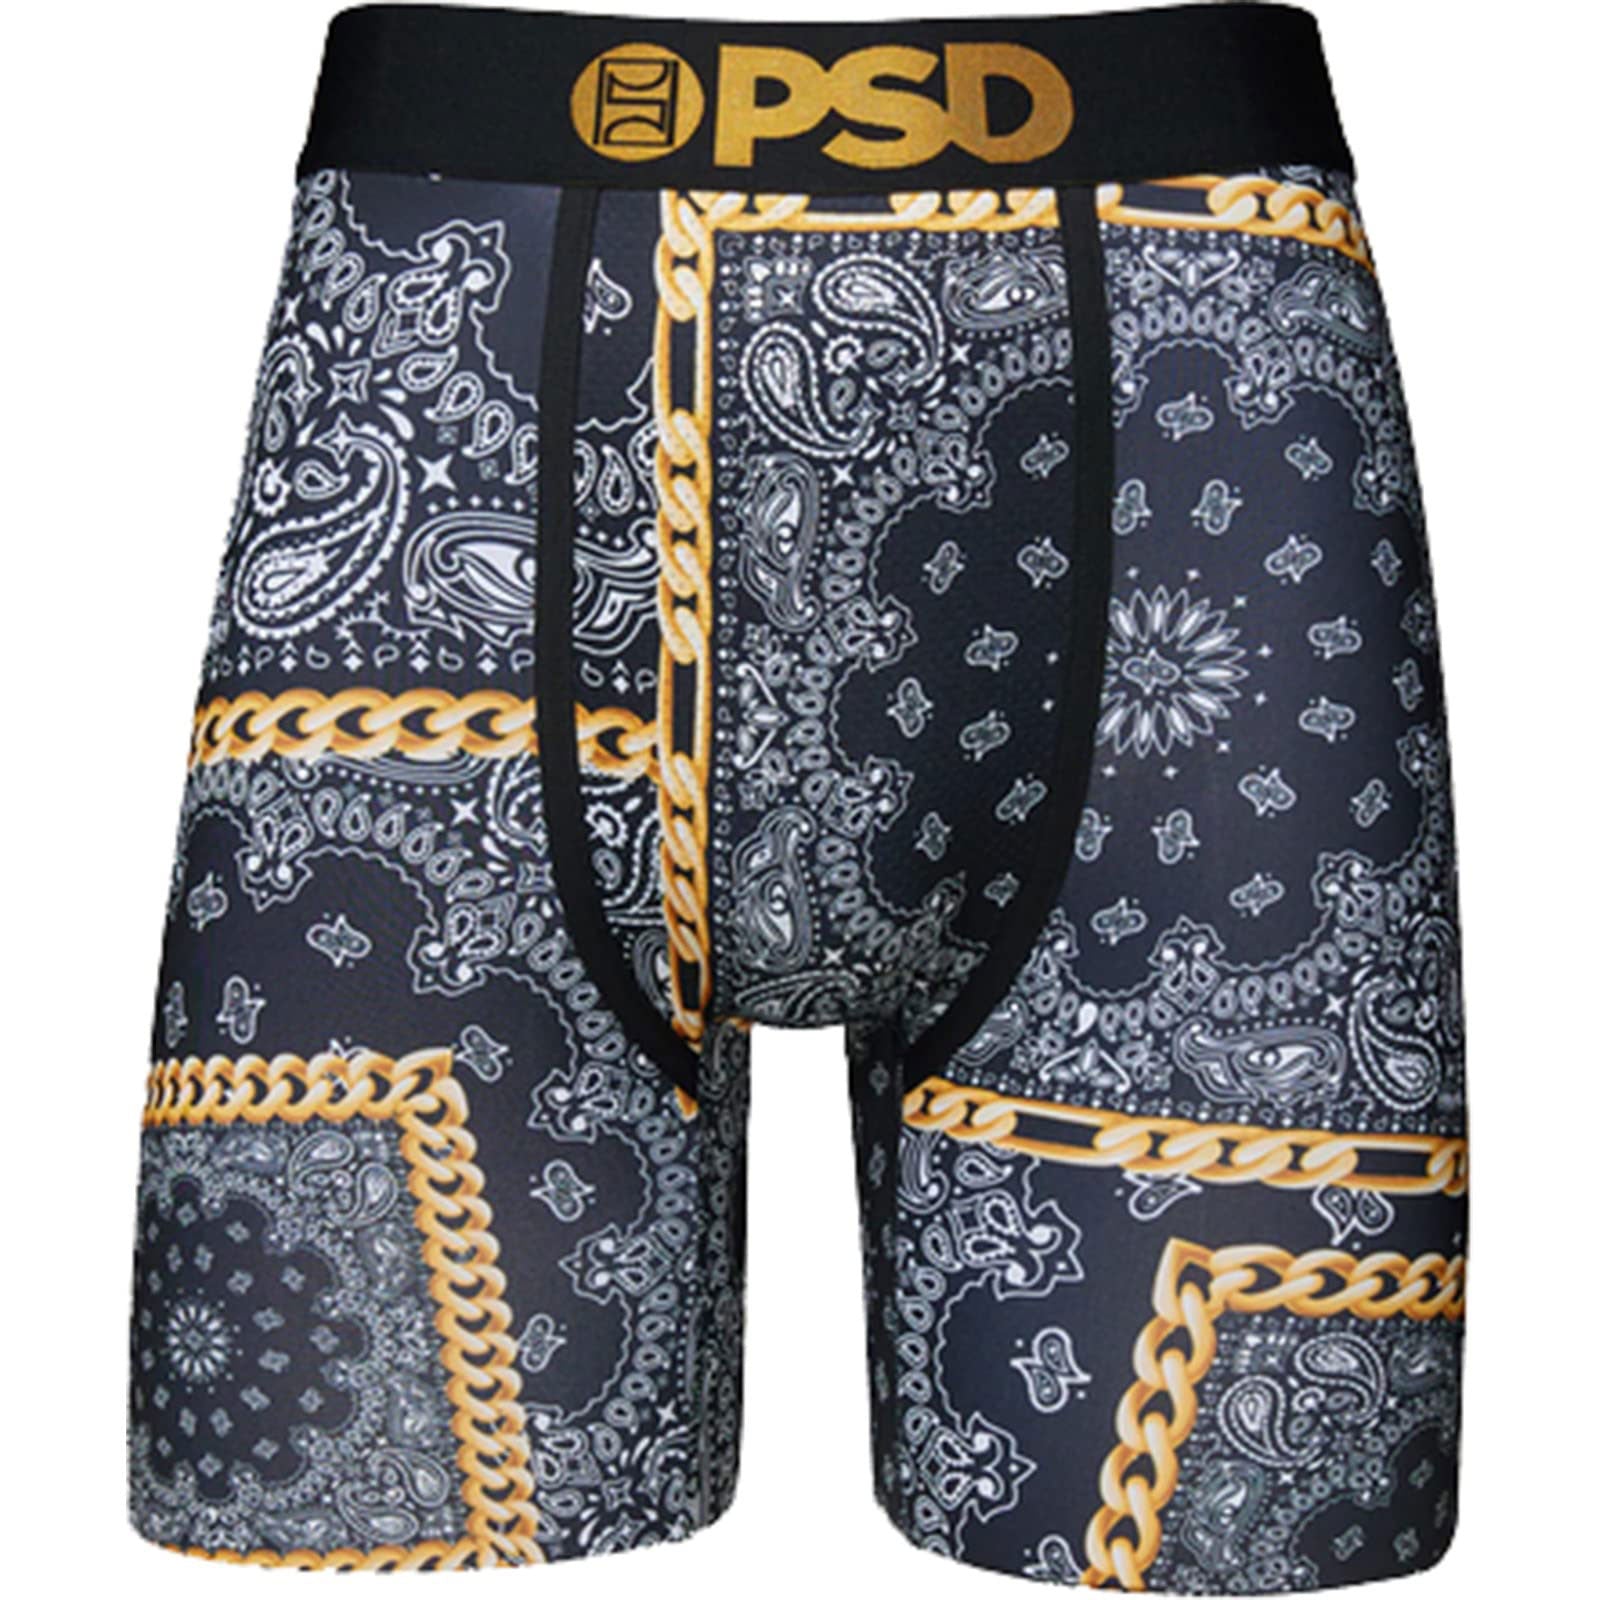 PSD Elf Son Sports Bra Women's Top Underwear (Refurbished, Without Tag –